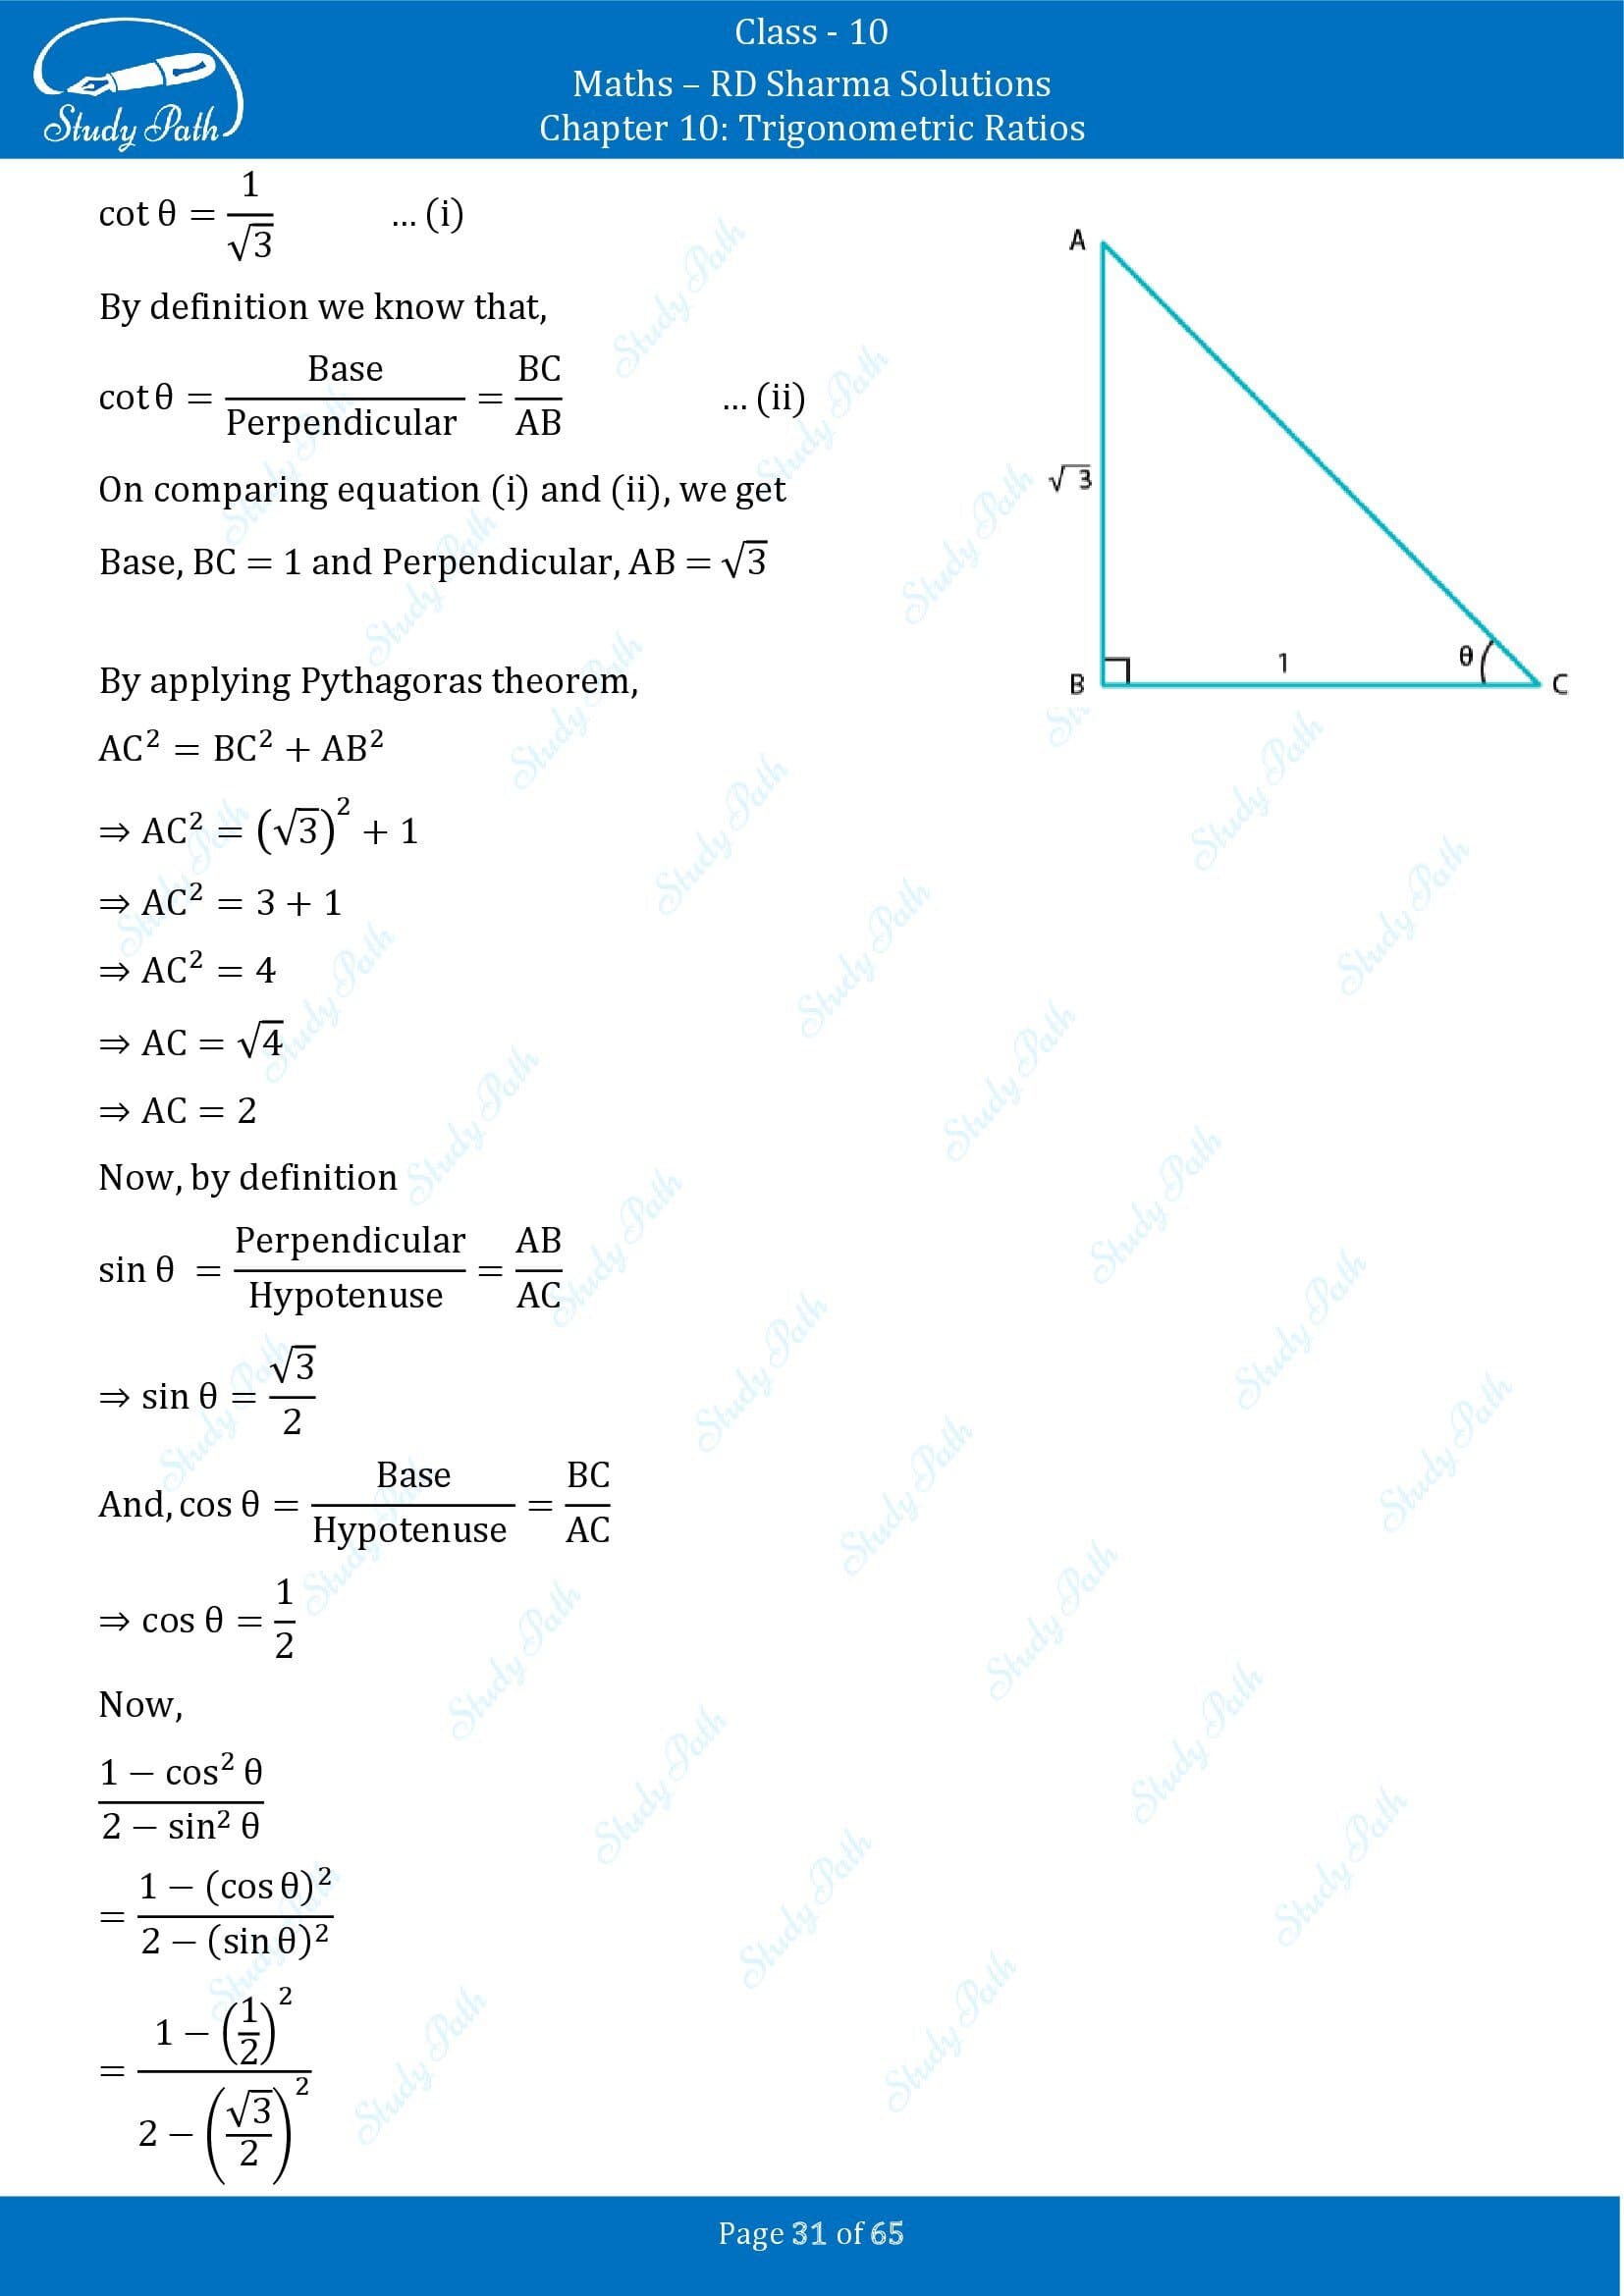 RD Sharma Solutions Class 10 Chapter 10 Trigonometric Ratios Exercise 10.1 00031